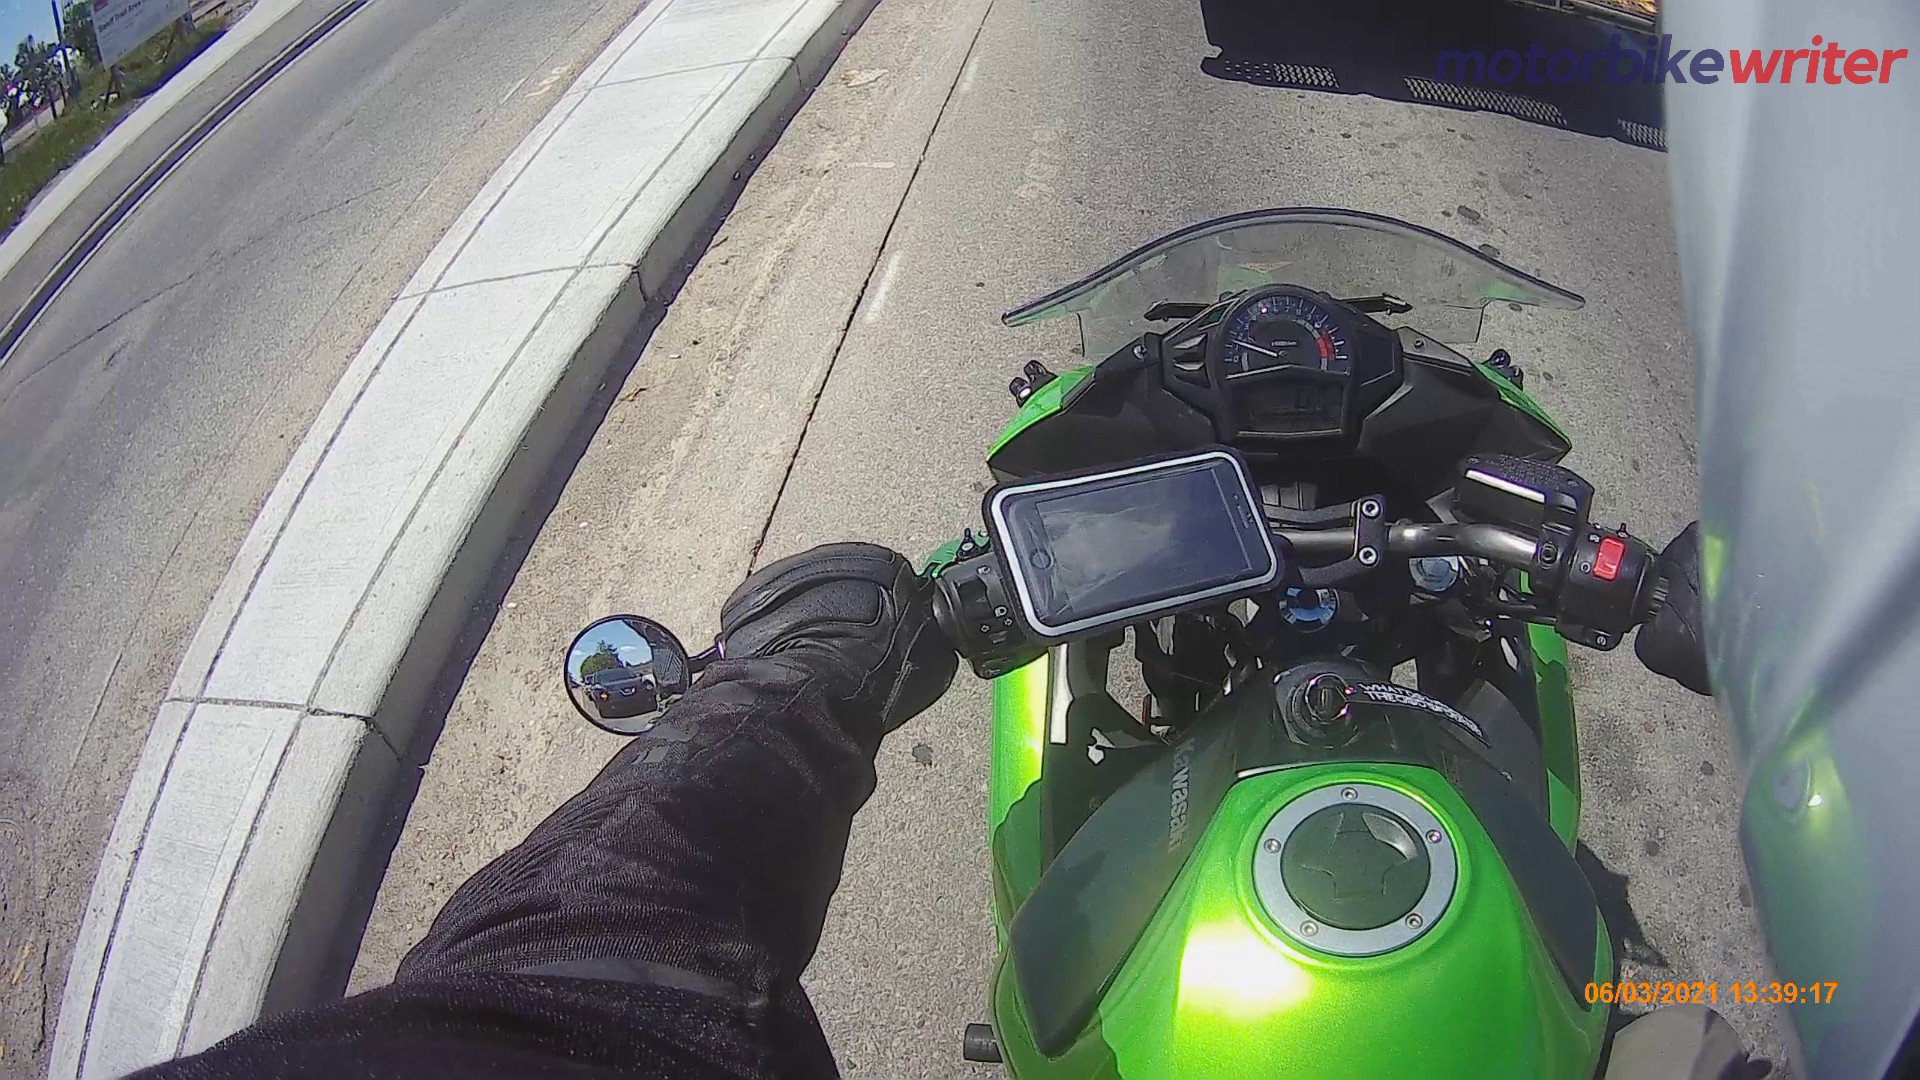 Rider view of Shapeheart kit mounted on Kawasaki Ninja